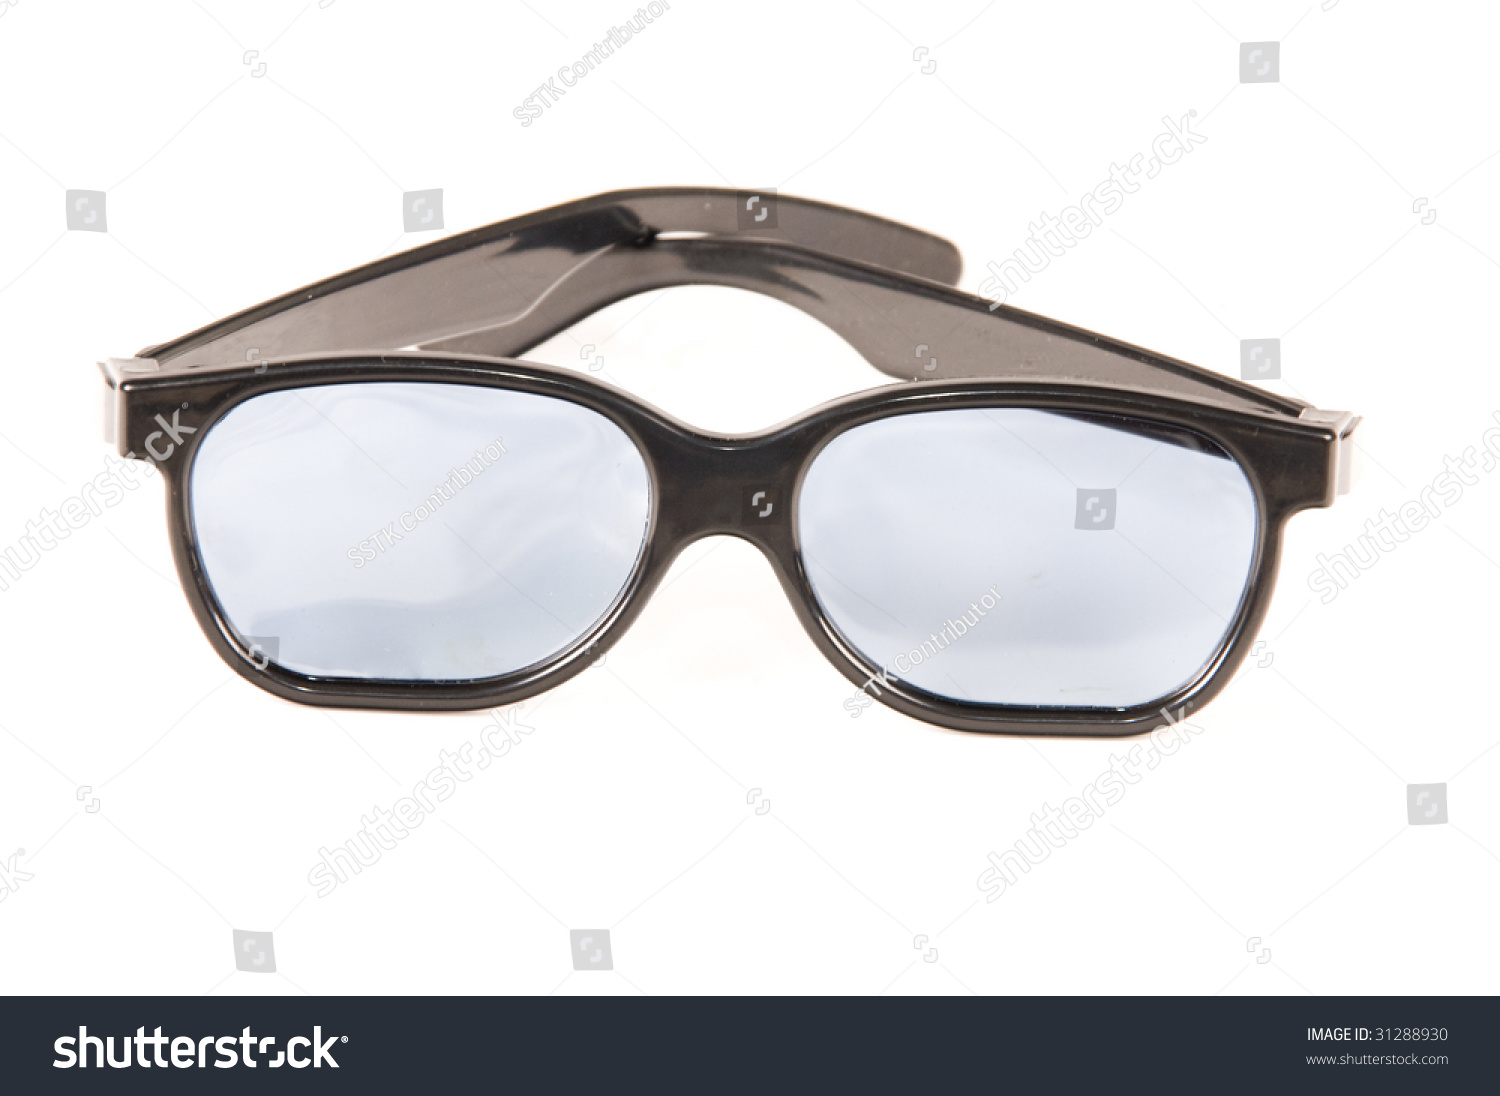 3d Cinema Glasses Stock Photo 31288930 : Shutterstock